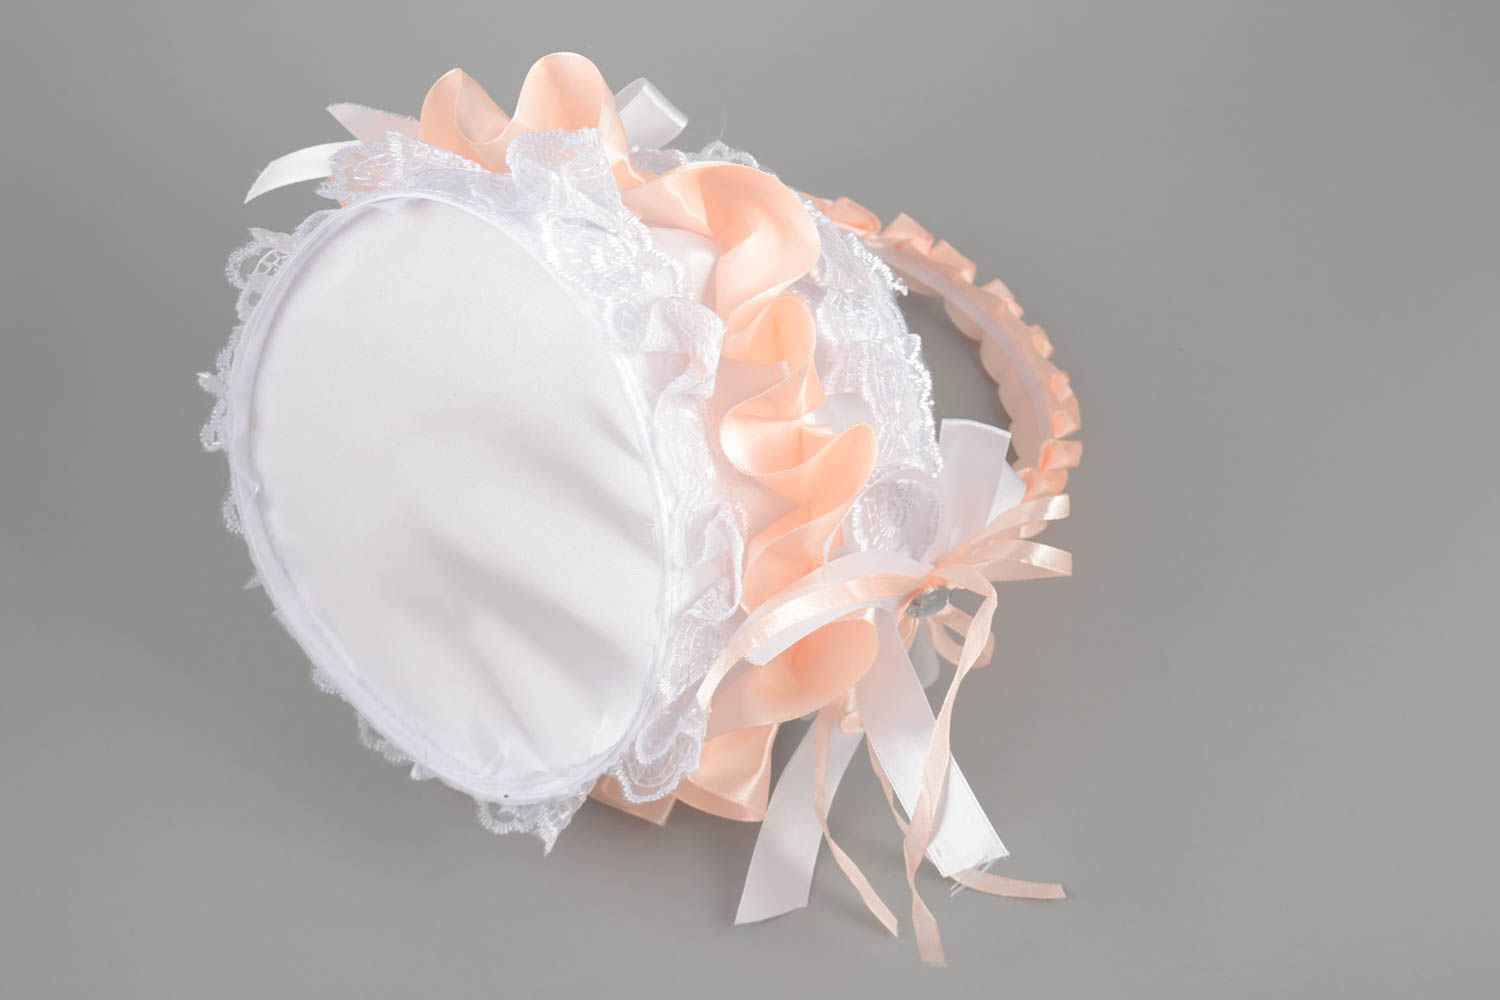 Handmade designer decorative lacy wedding basket for money and flower petals photo 3